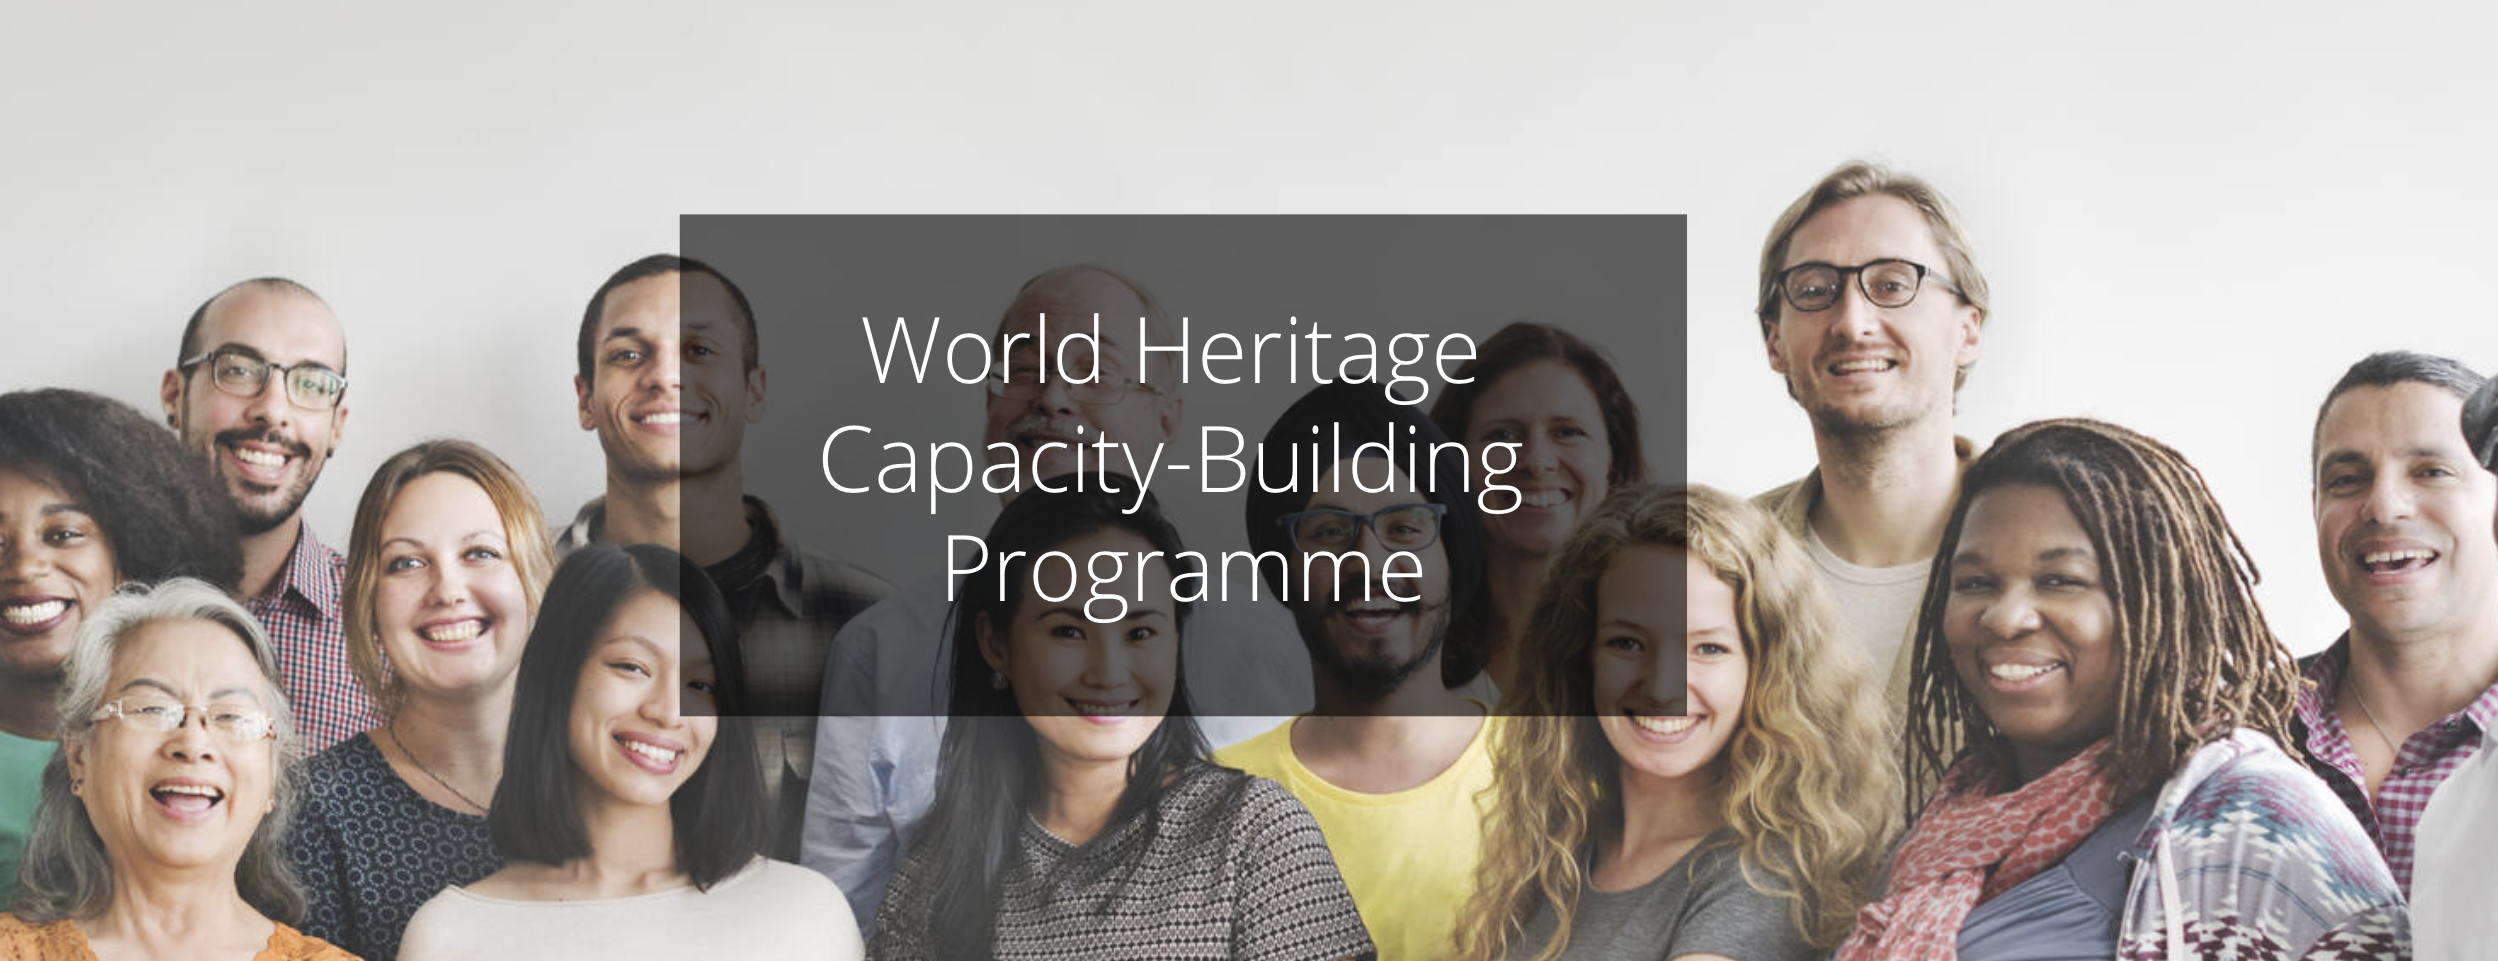 World Heritage Capacity-Building Programme